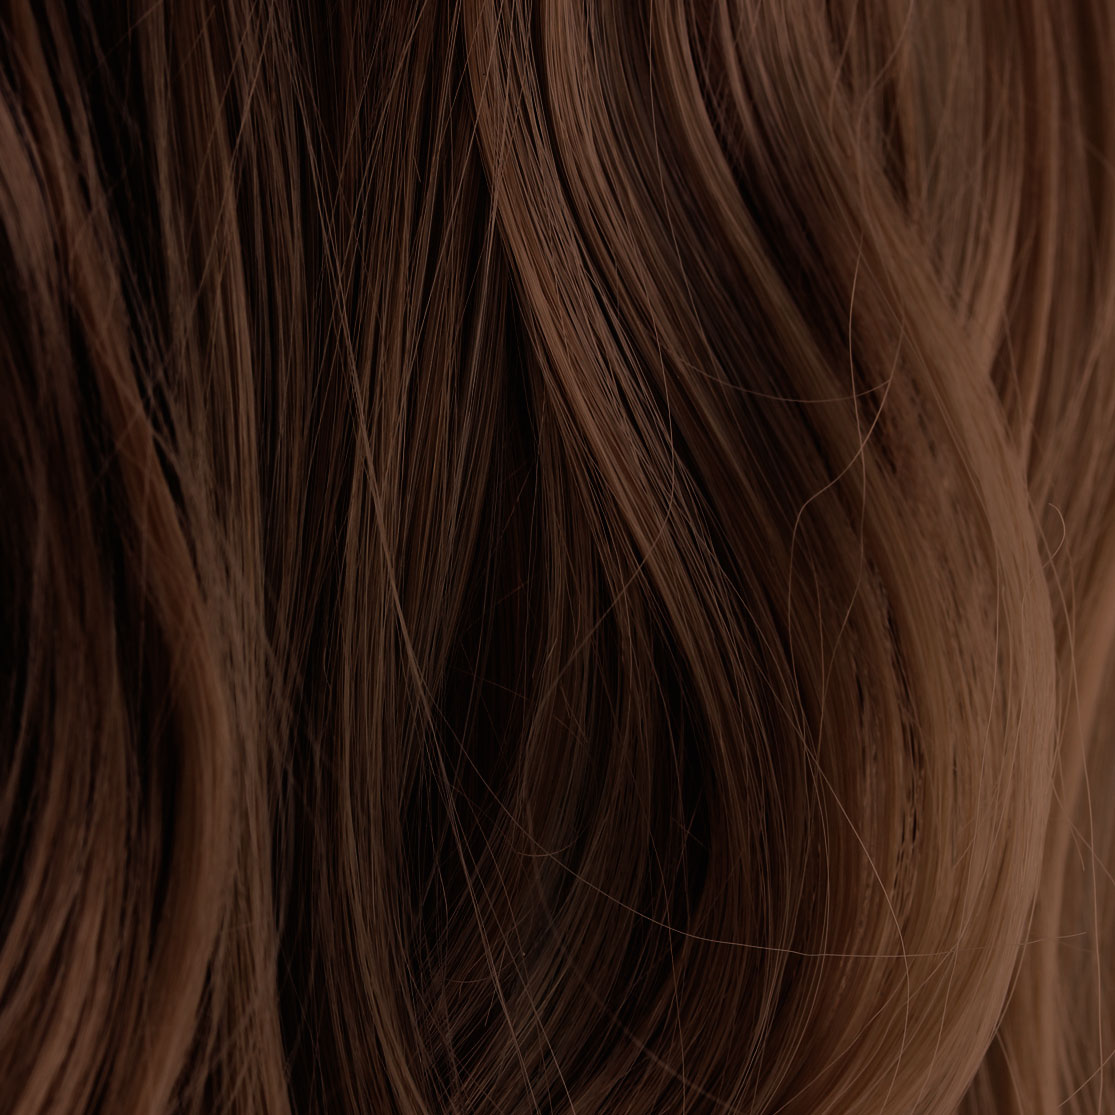 Herbal Copper Brown Henna Hair Dye | Henna Color Lab®